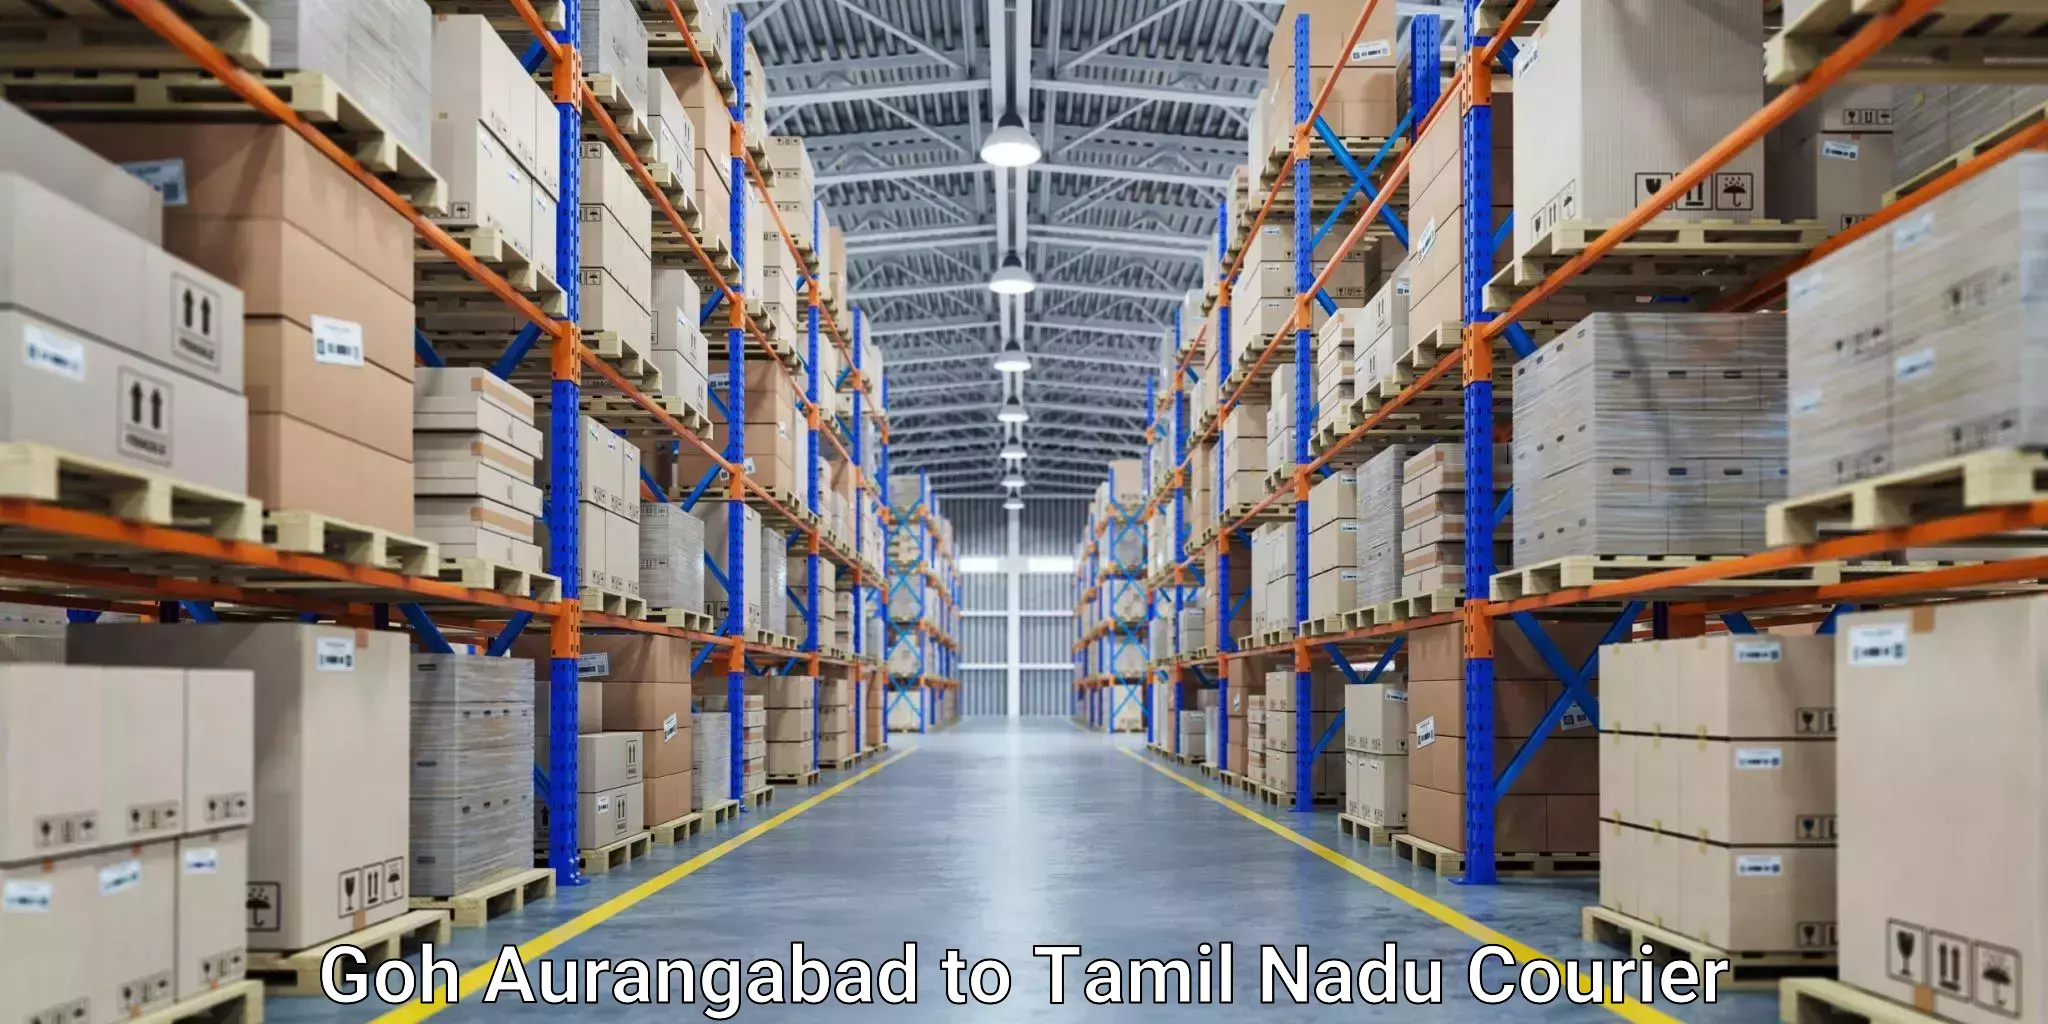 Customizable delivery plans Goh Aurangabad to Tamil Nadu